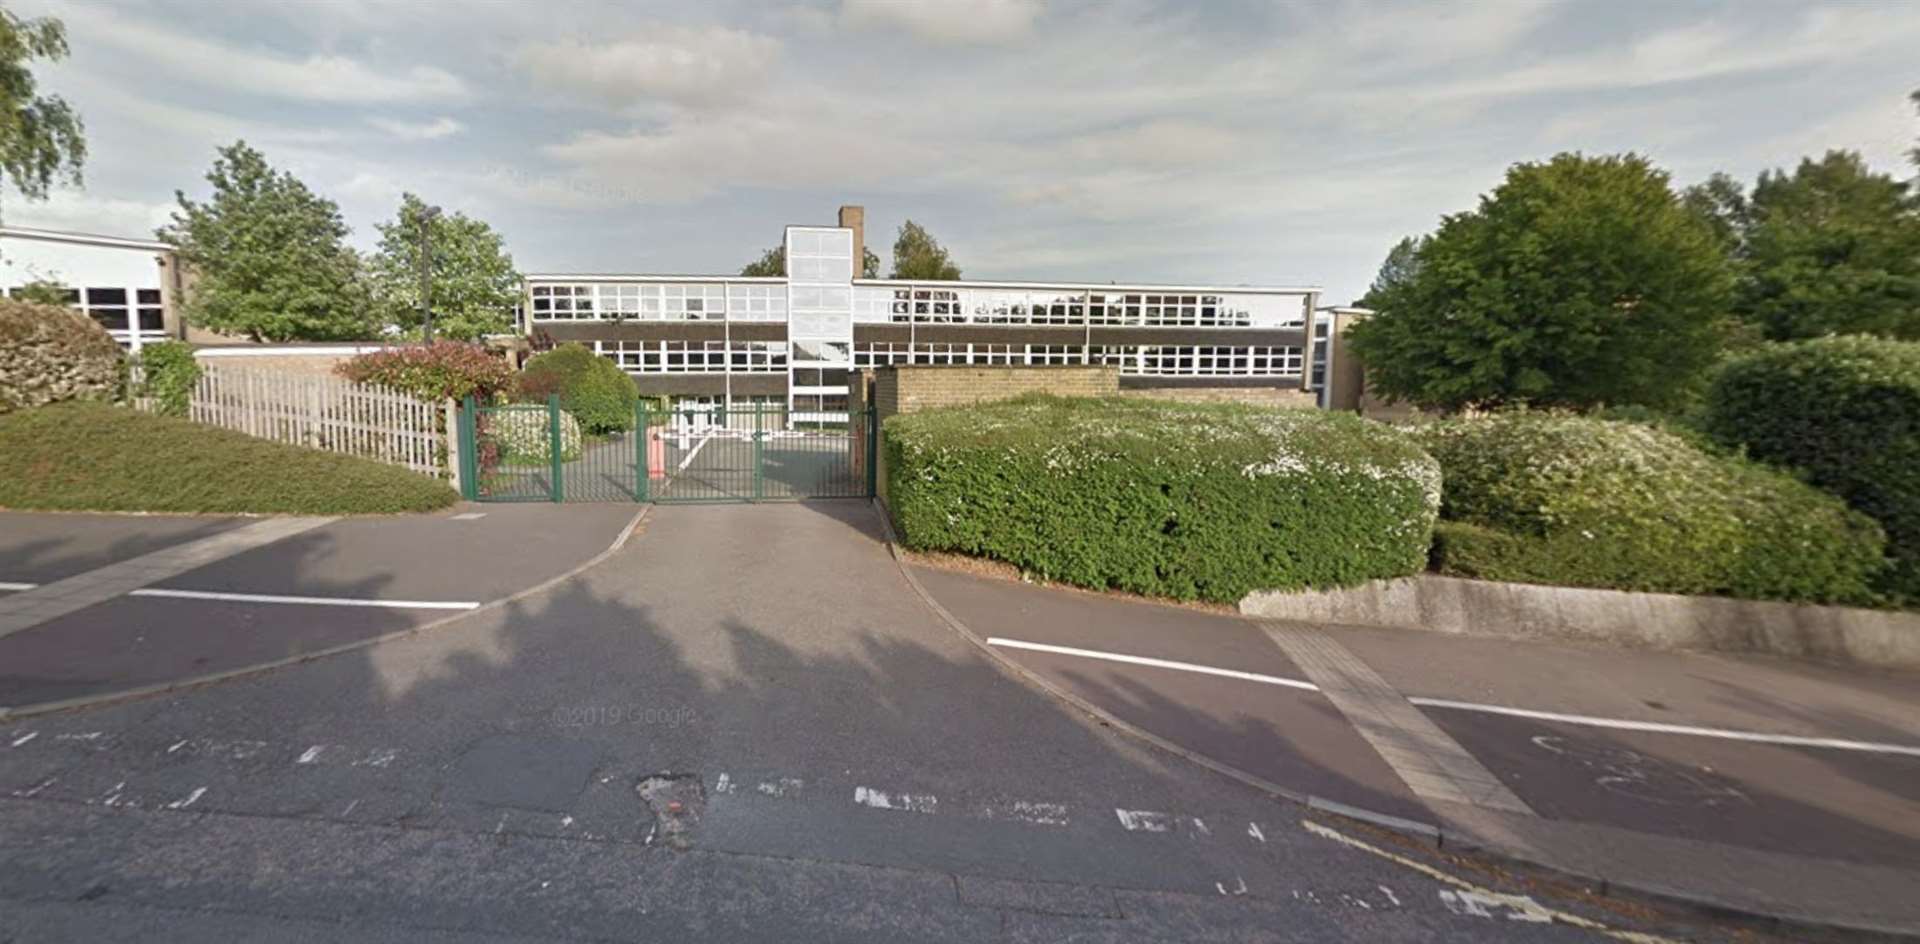 Invicta Grammar School for Girls in Huntsman Lane. Picture: Google Street View